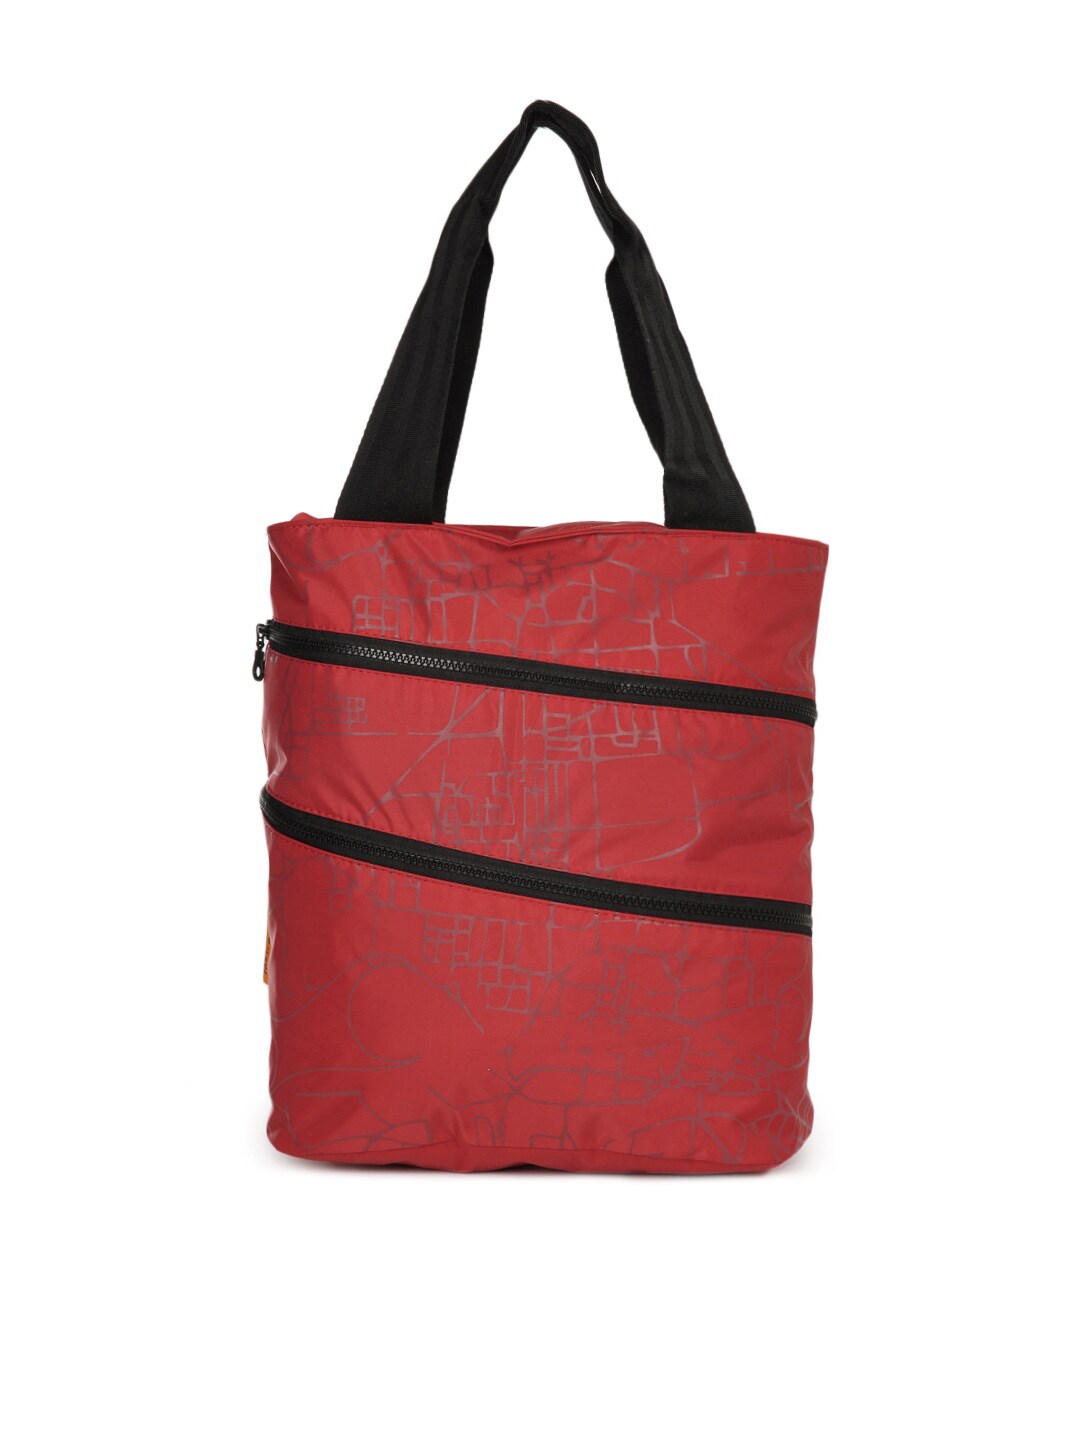 Fastrack Red Printed Tote Bag